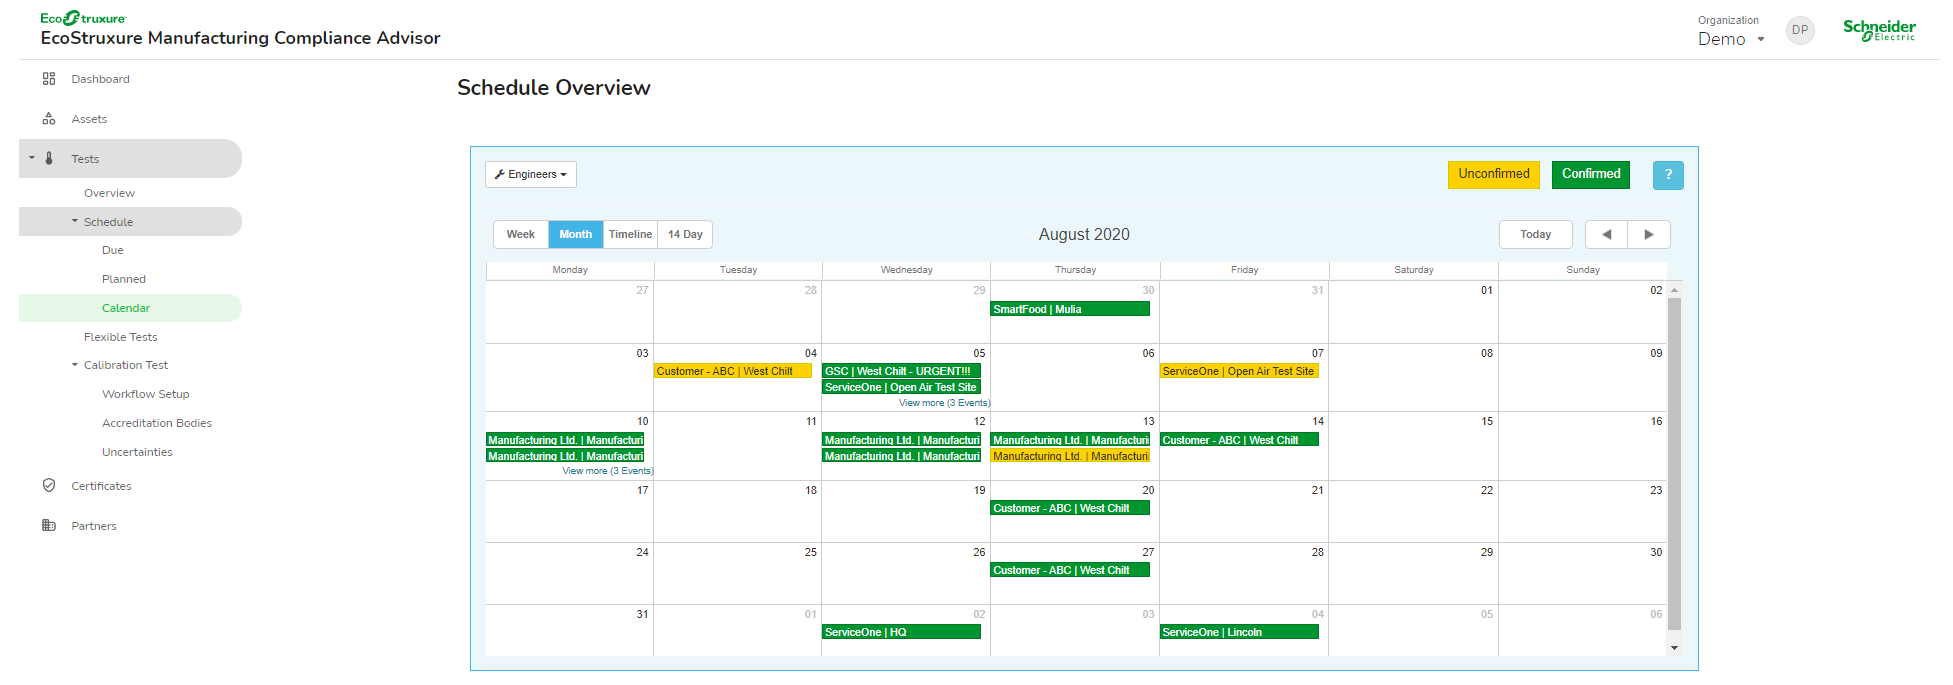 Calendar View - Day/Week/Month